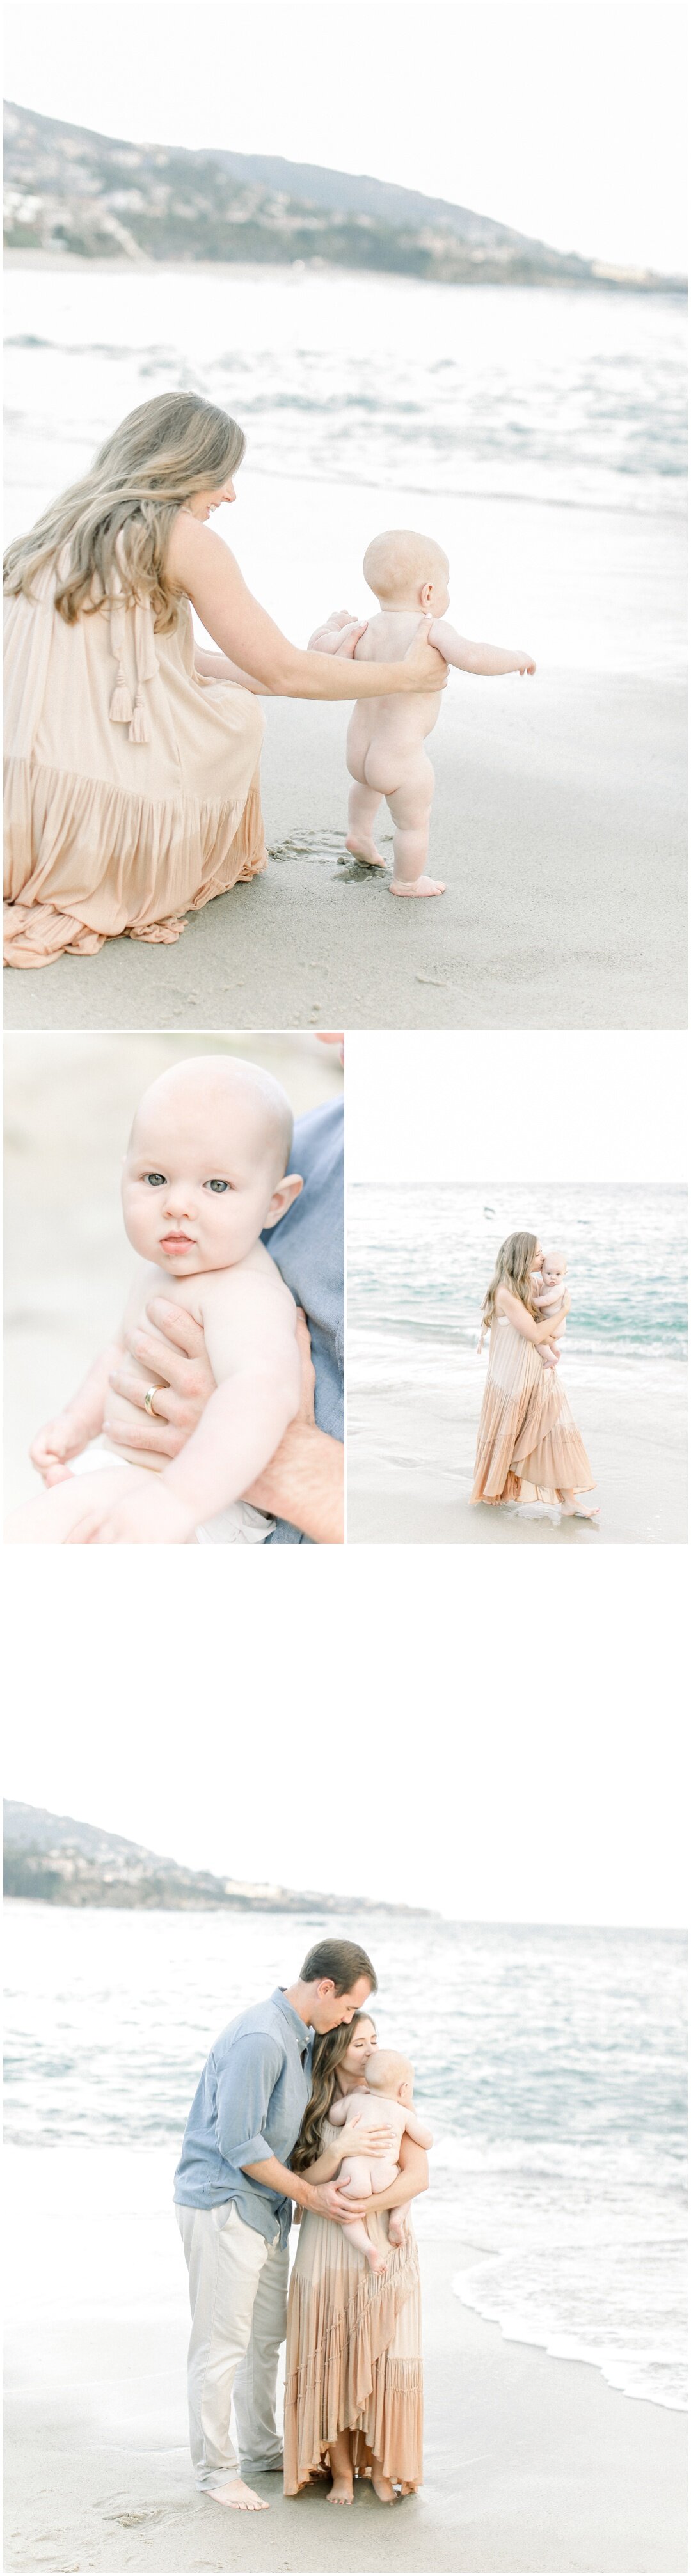 Newport+Beach+Newborn+Maternity+Photographer+Orange+County+Family+Photographer+Cori+Kleckner+Photography+Forgatch+Family+Matt+Kelley+Jack+Forgatch+_4410.jpg